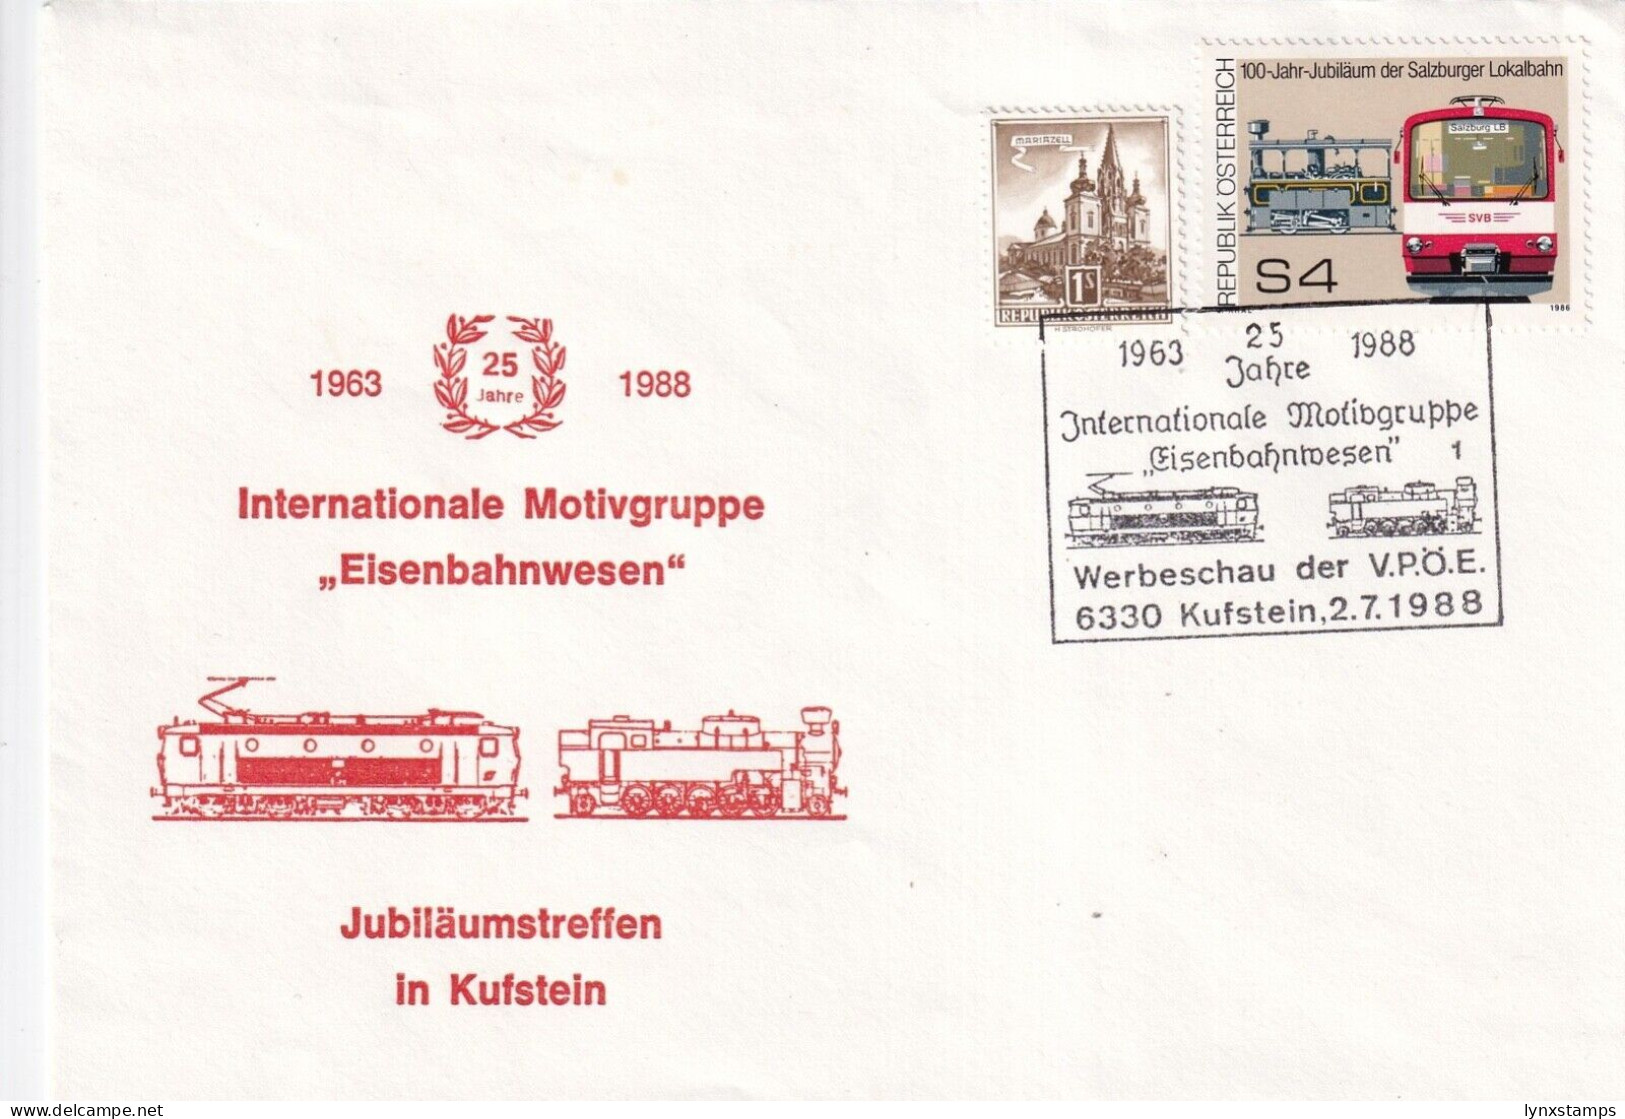 G018 Austria 1988 Trains Railroad Cover - Briefe U. Dokumente